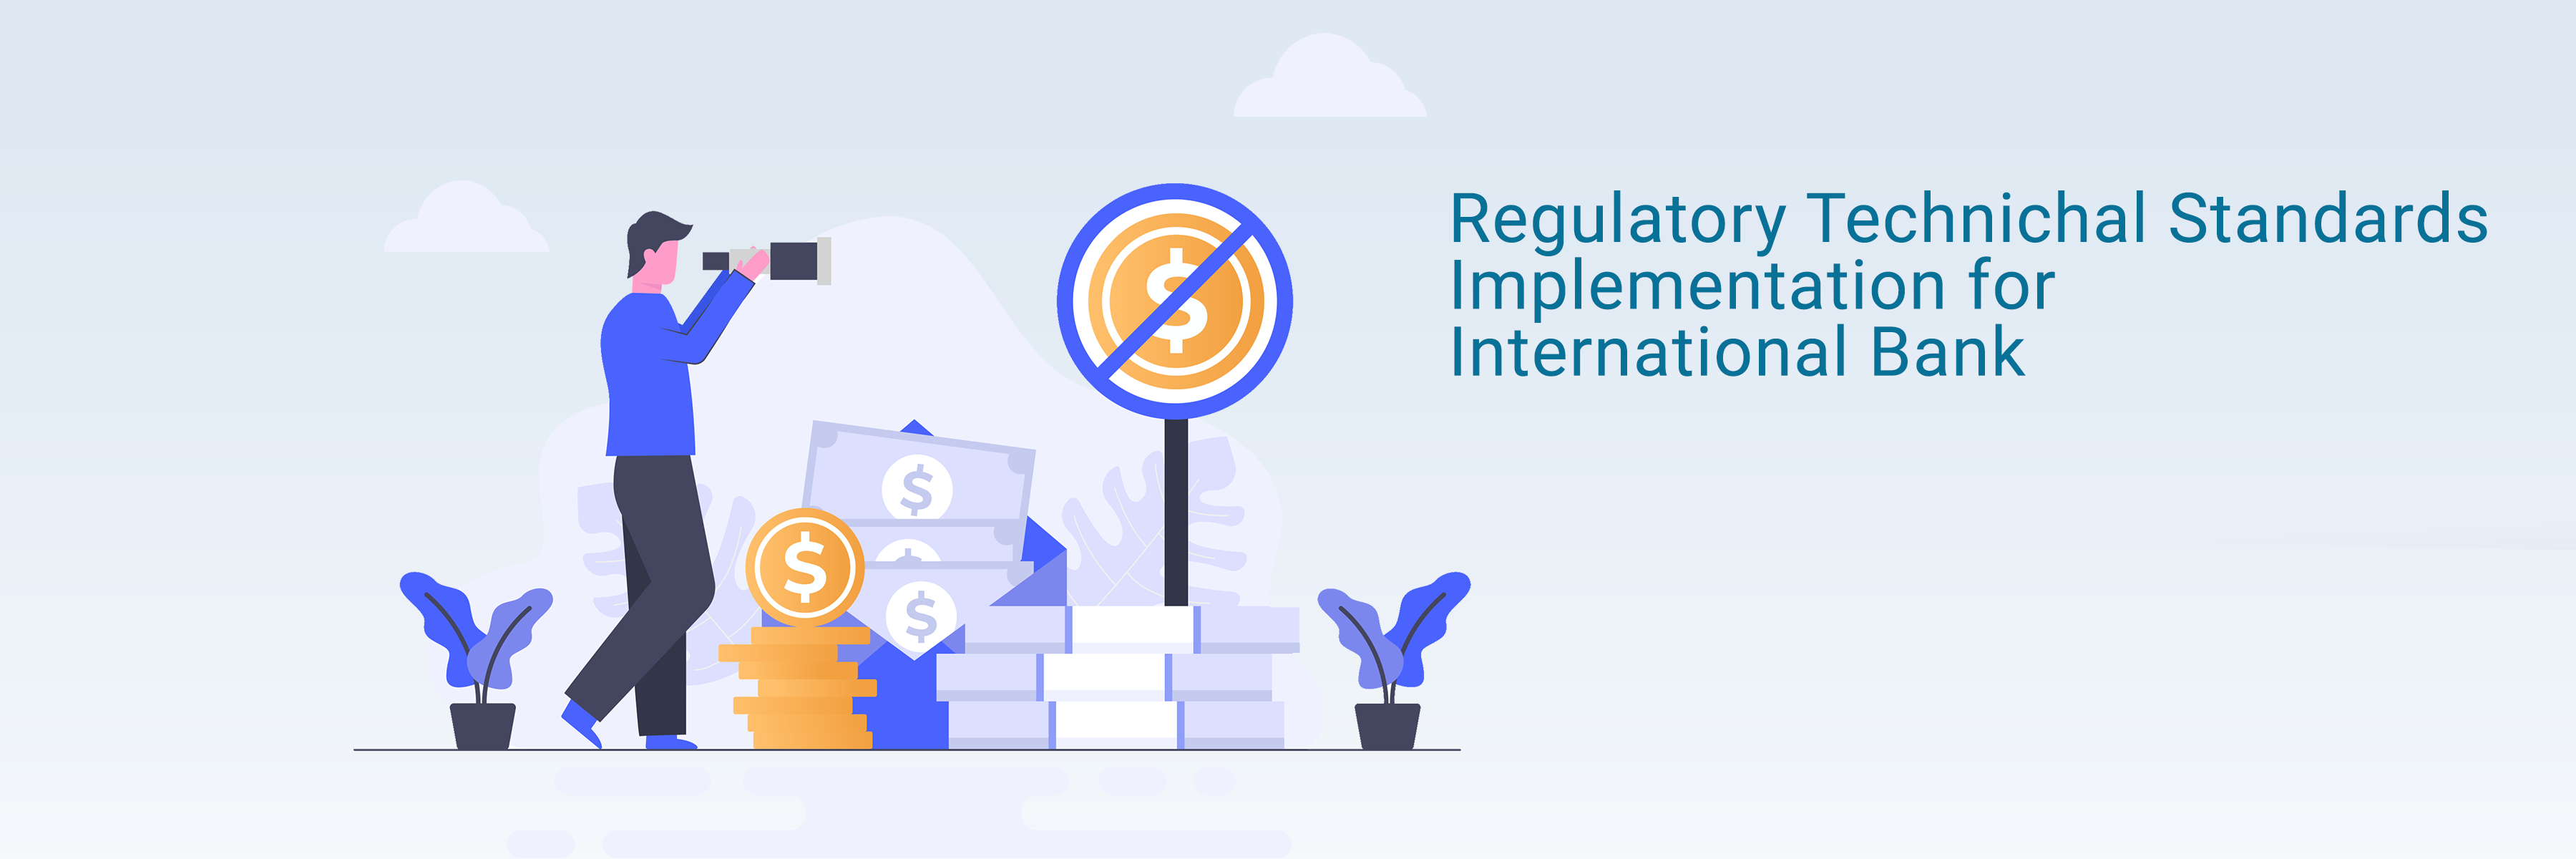 Bank Regulatory Technichal Standards Implementation